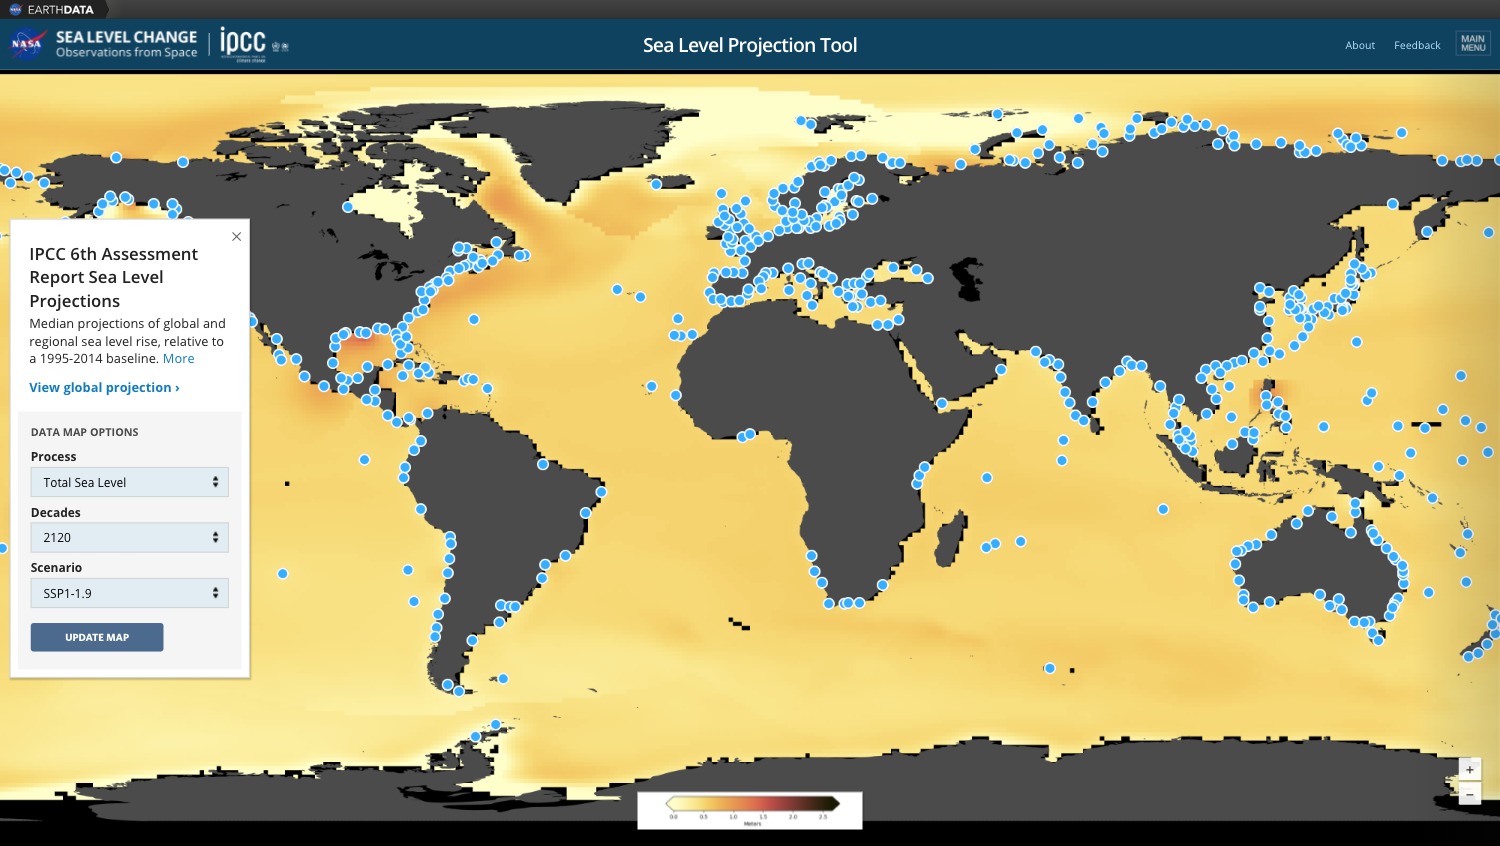 NASA Sea level projection tool - International Society for Geomorphometry